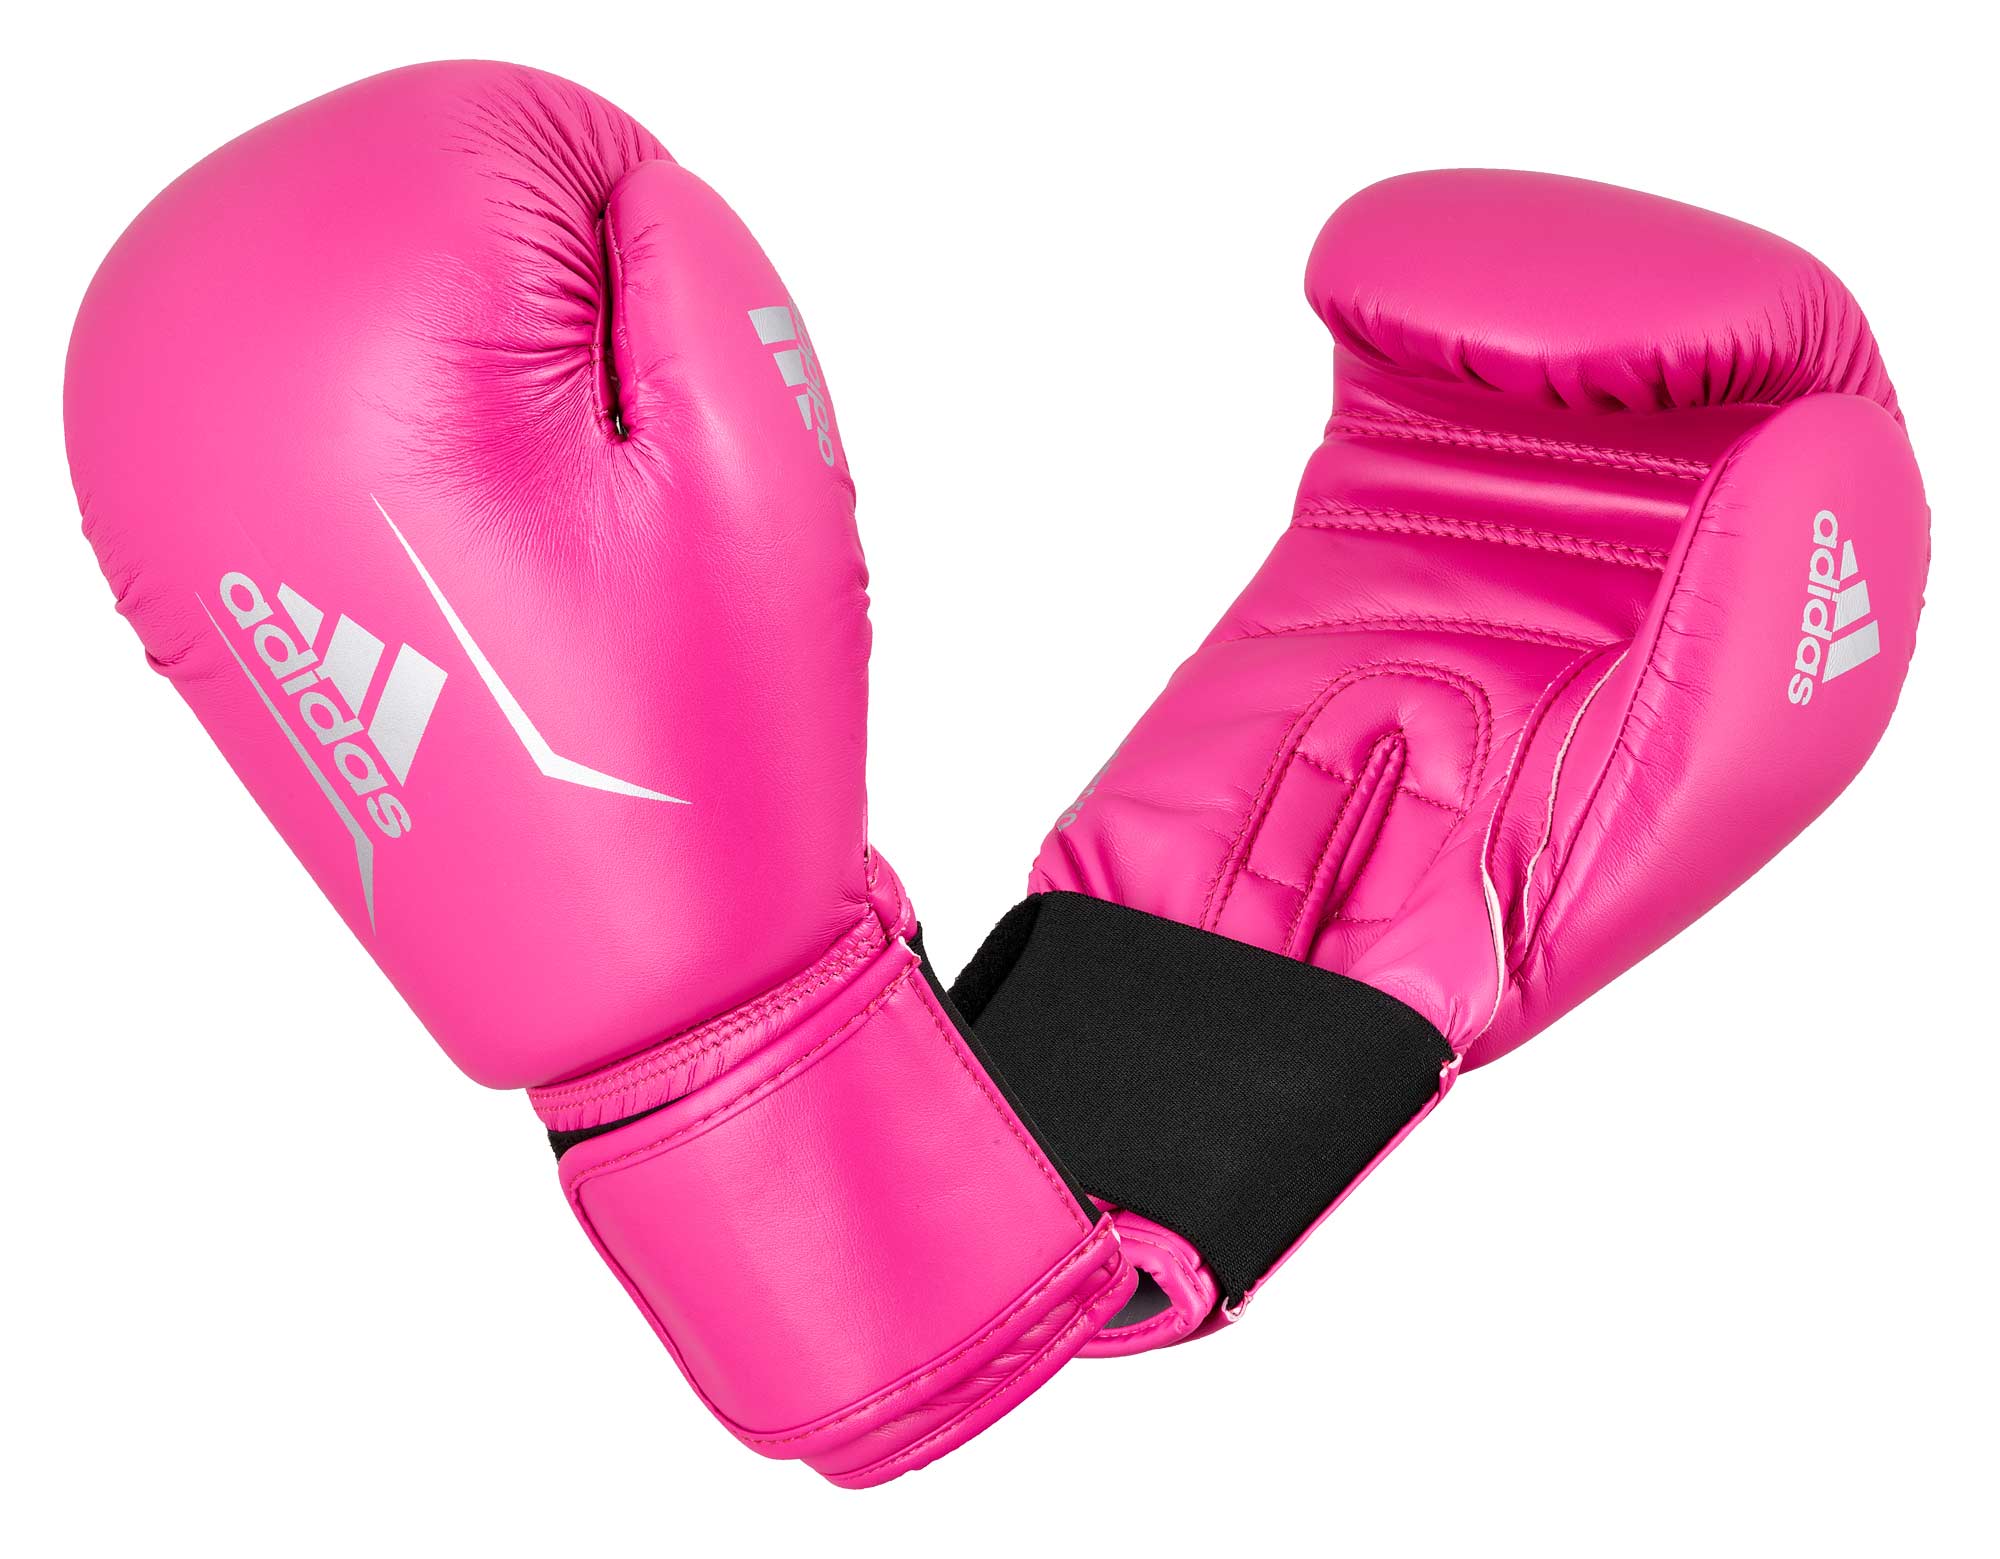 Boxhandschuhe ADIDAS 50 | Ausrüstung Kinder Kickbox | pink/silver | Speed Handschuhe Boxhandschuhe